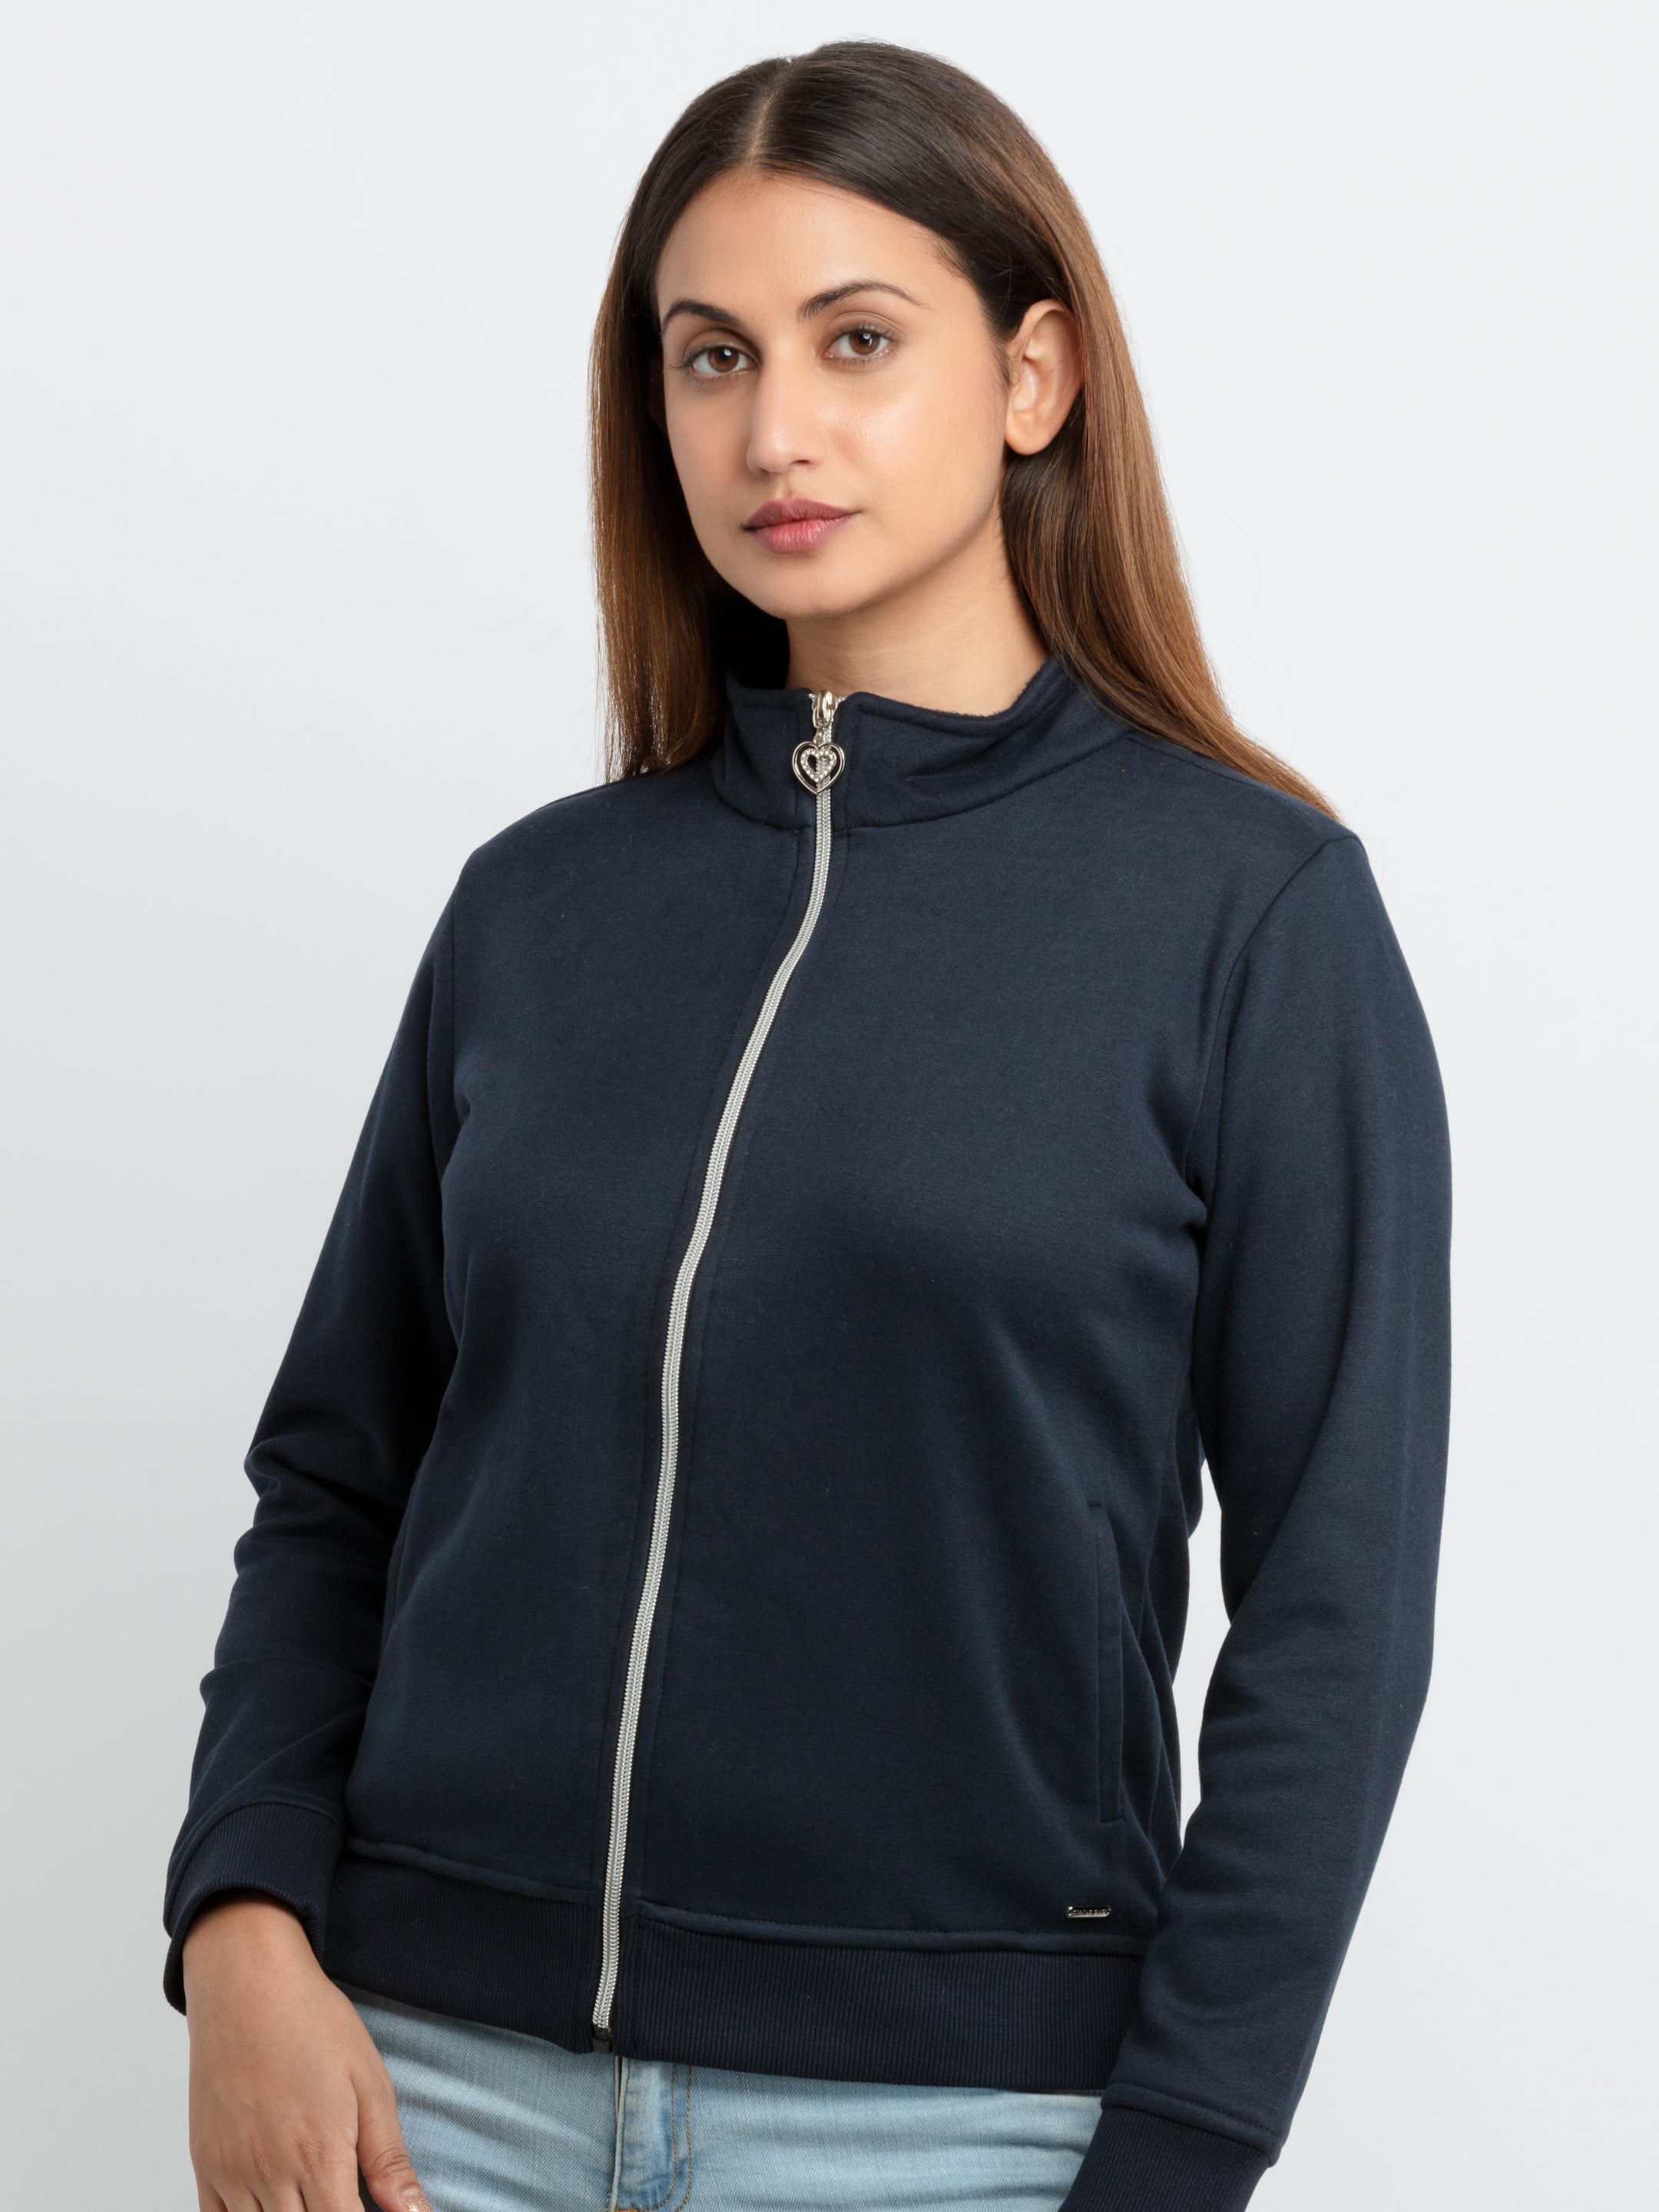 high neck sweatshirt for women